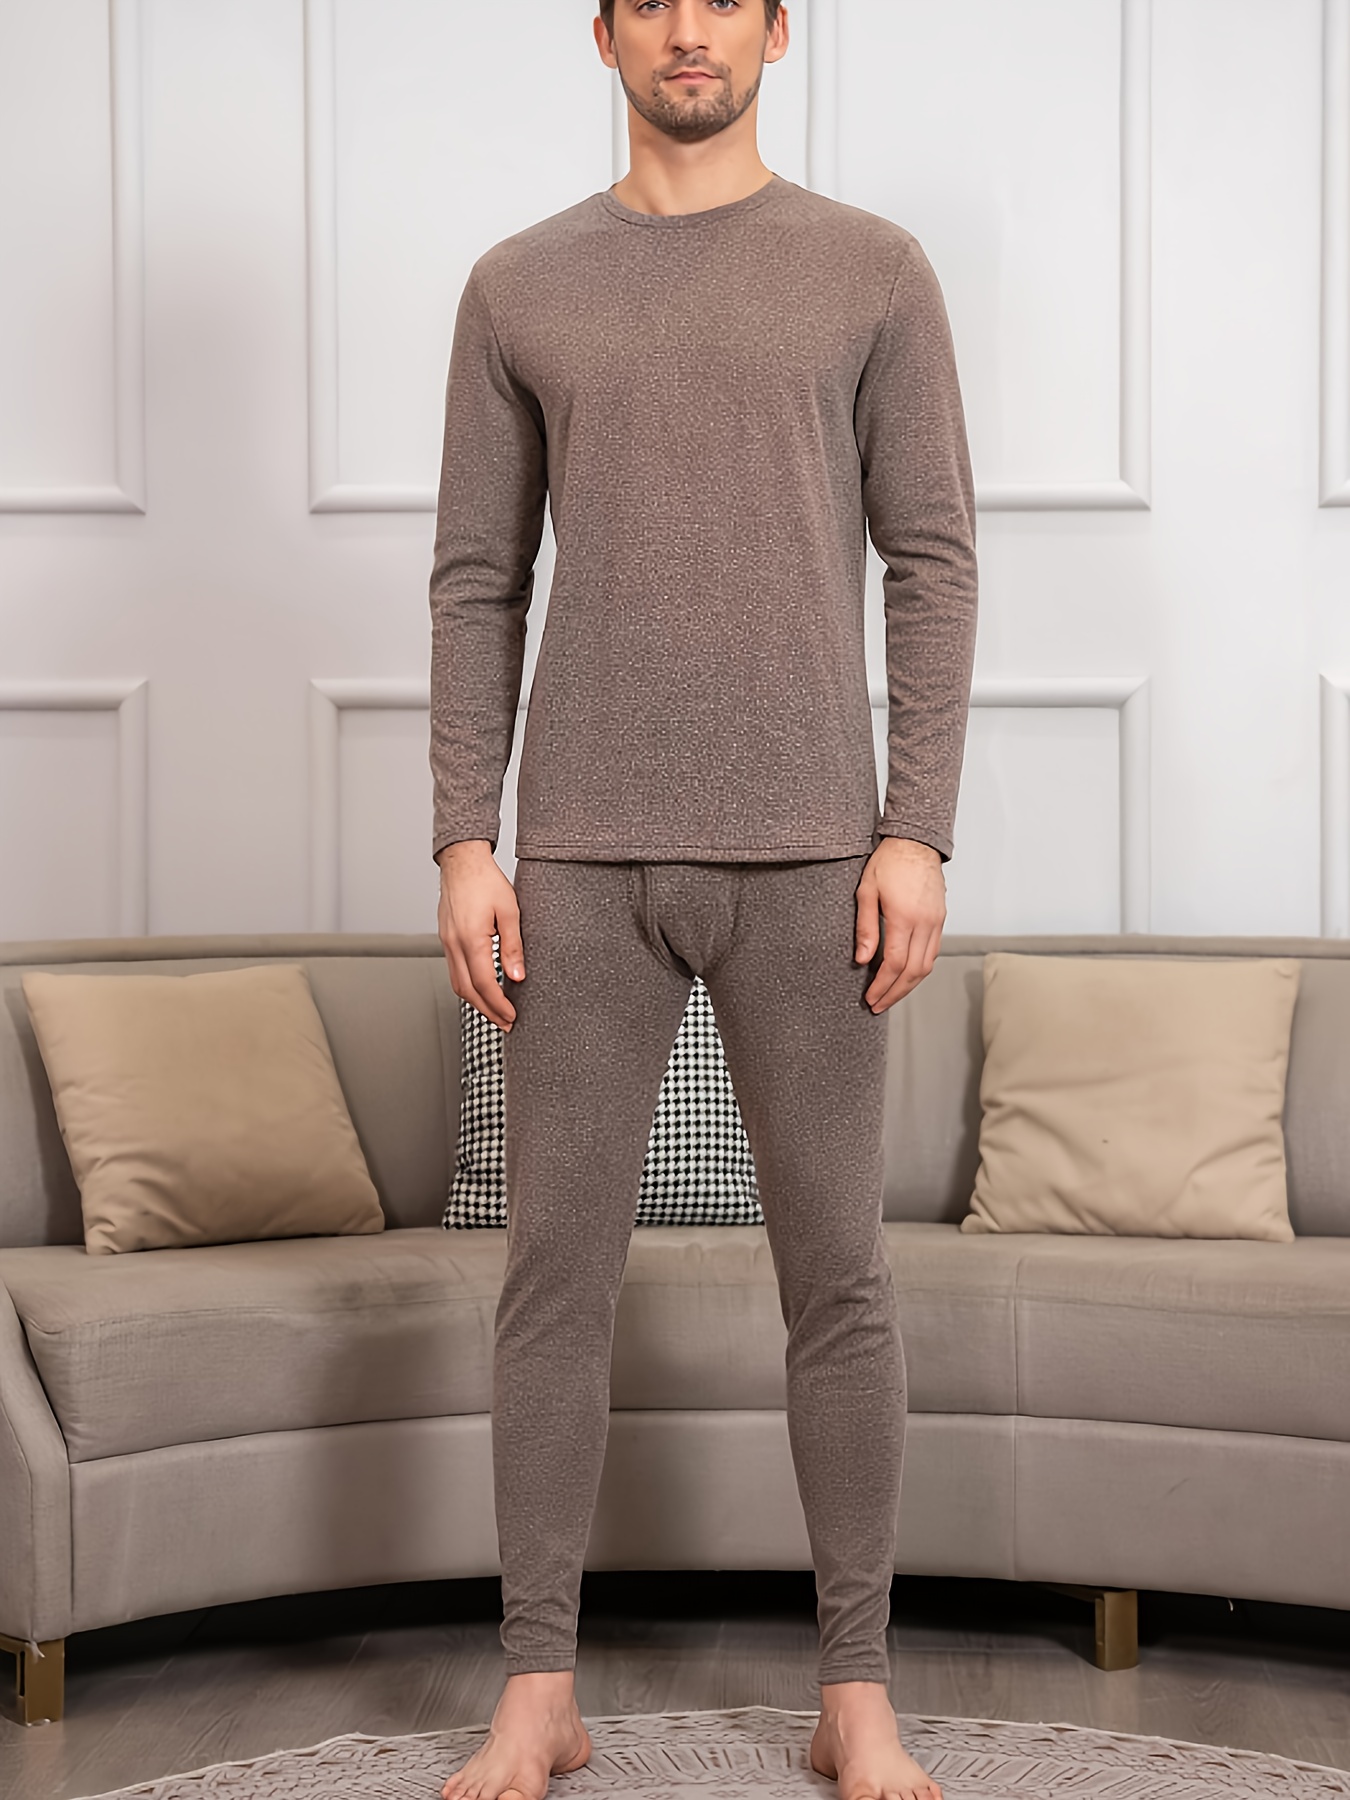 Buy Large Tall Thermal Underwear Mens Warm Thermal Set Sleeping Tops  Stretch Pajamas Black XL at